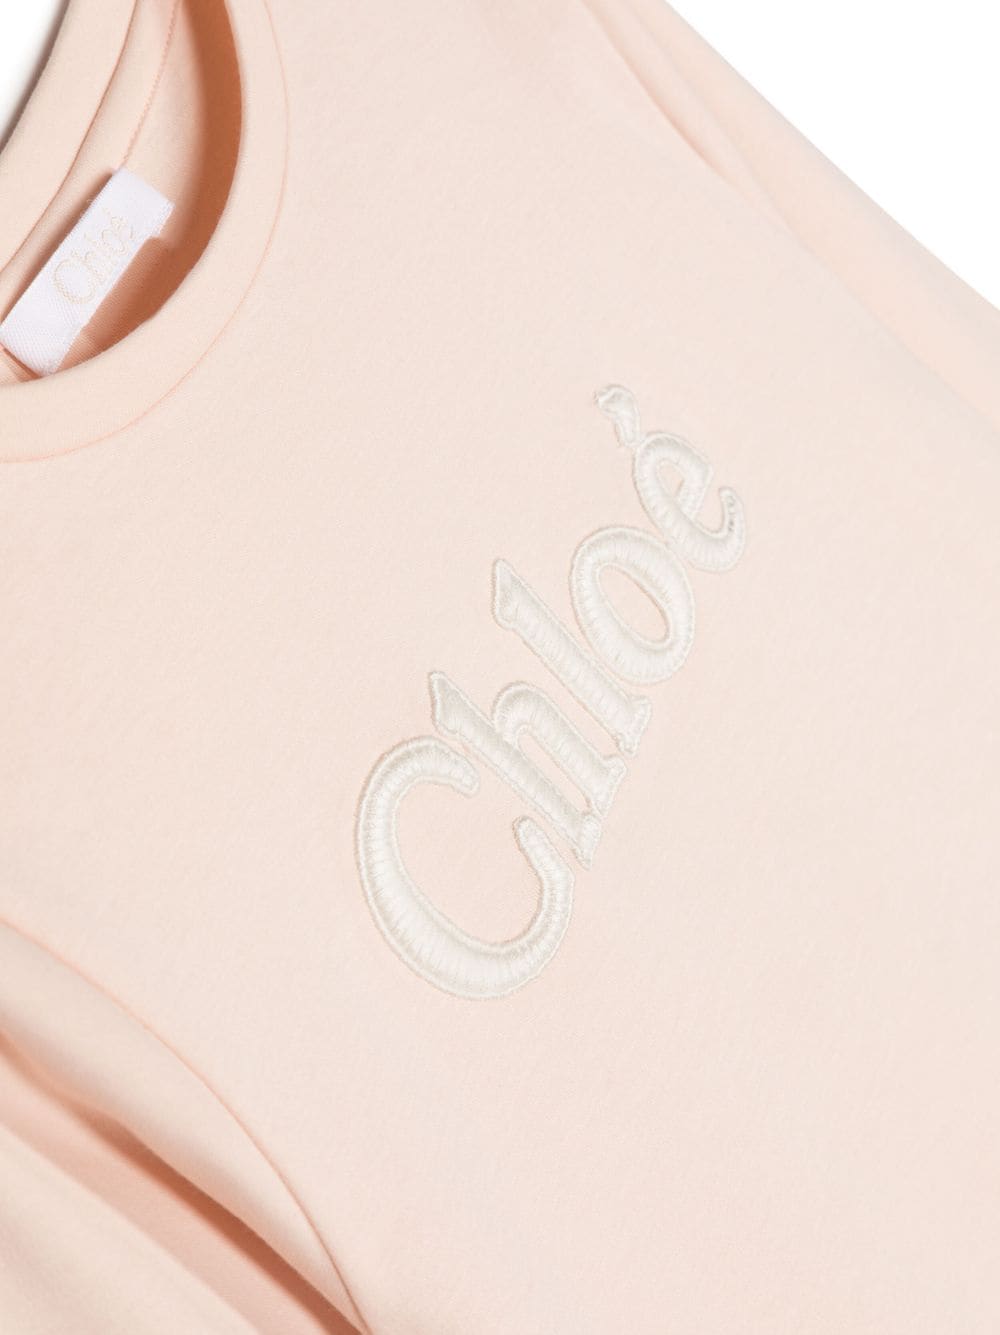 Powder pink cotton jersey girl CHLOE' t-shirt